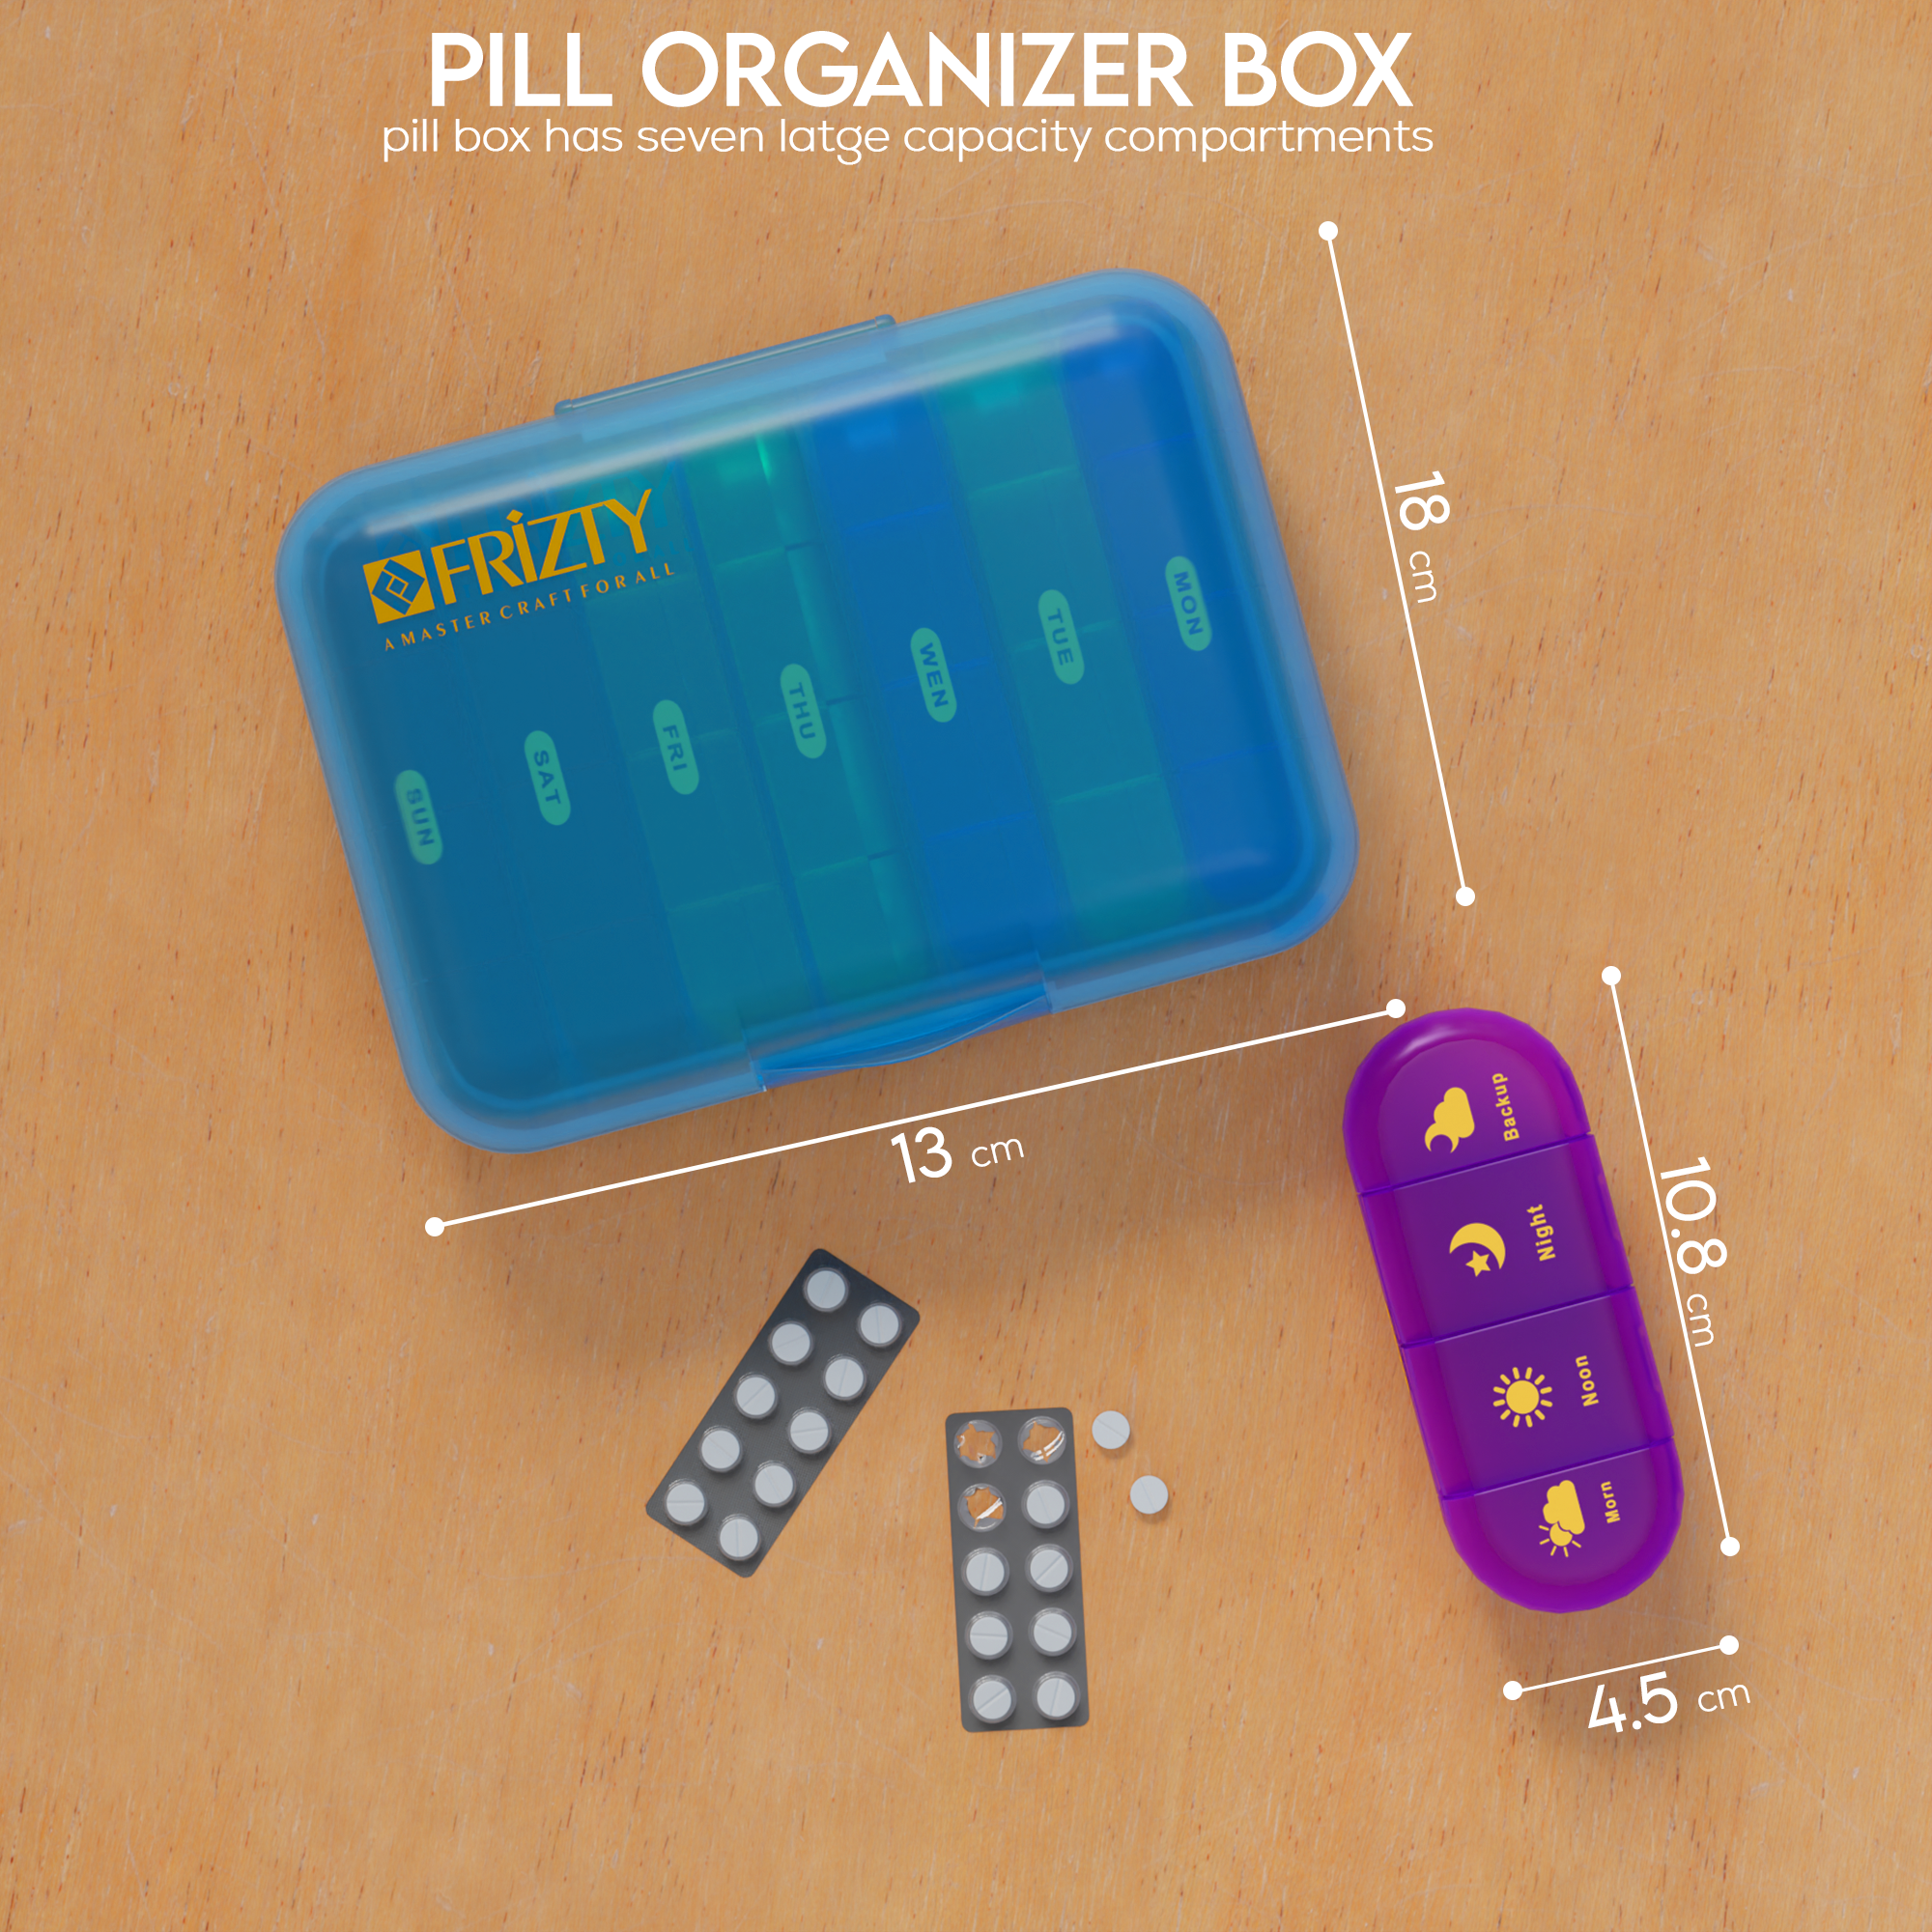 Frizty Weekly Pill Organizer